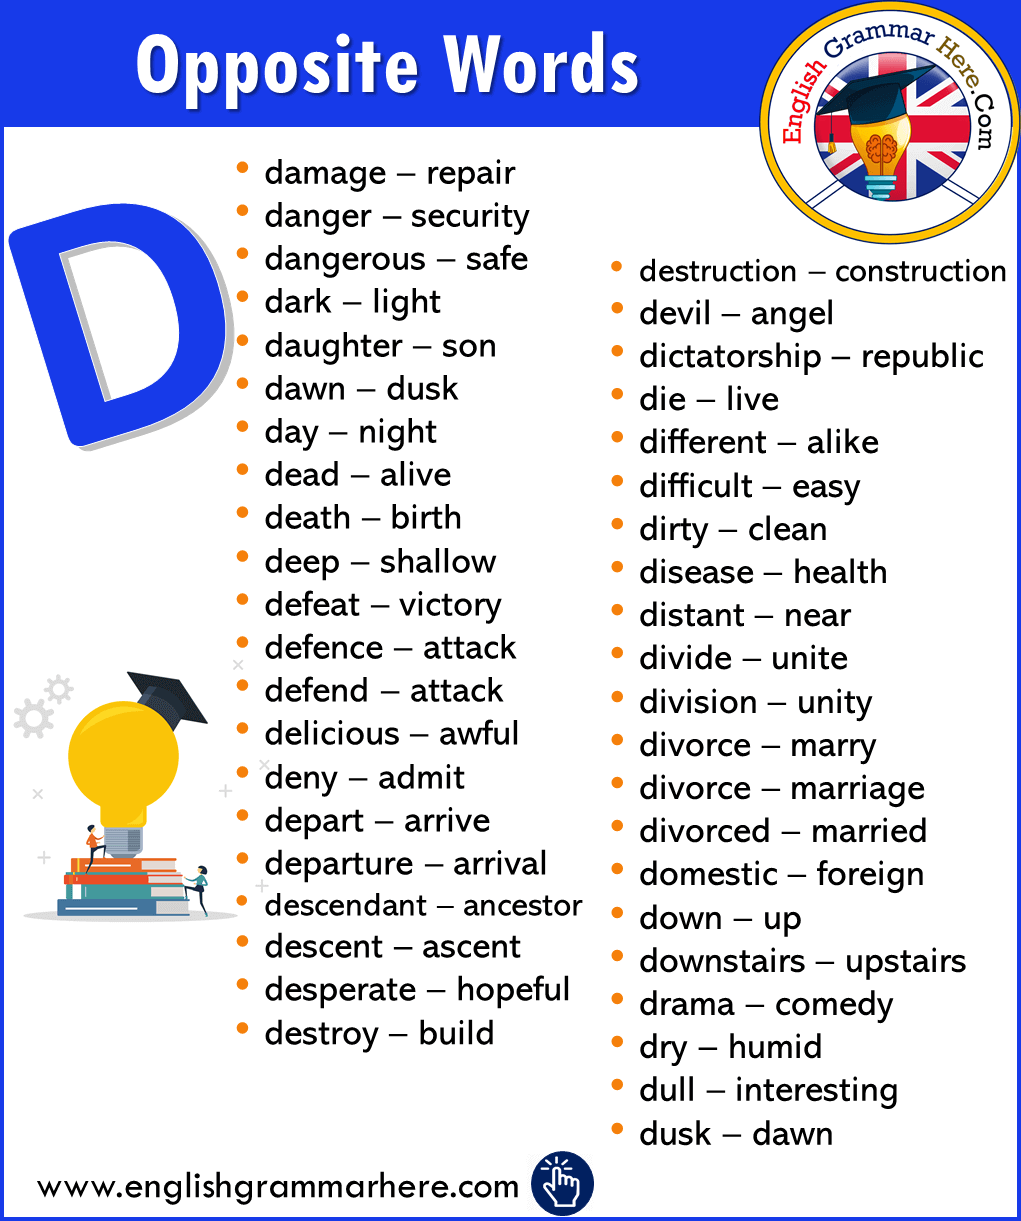 Alphabetical Opposite Word List – D